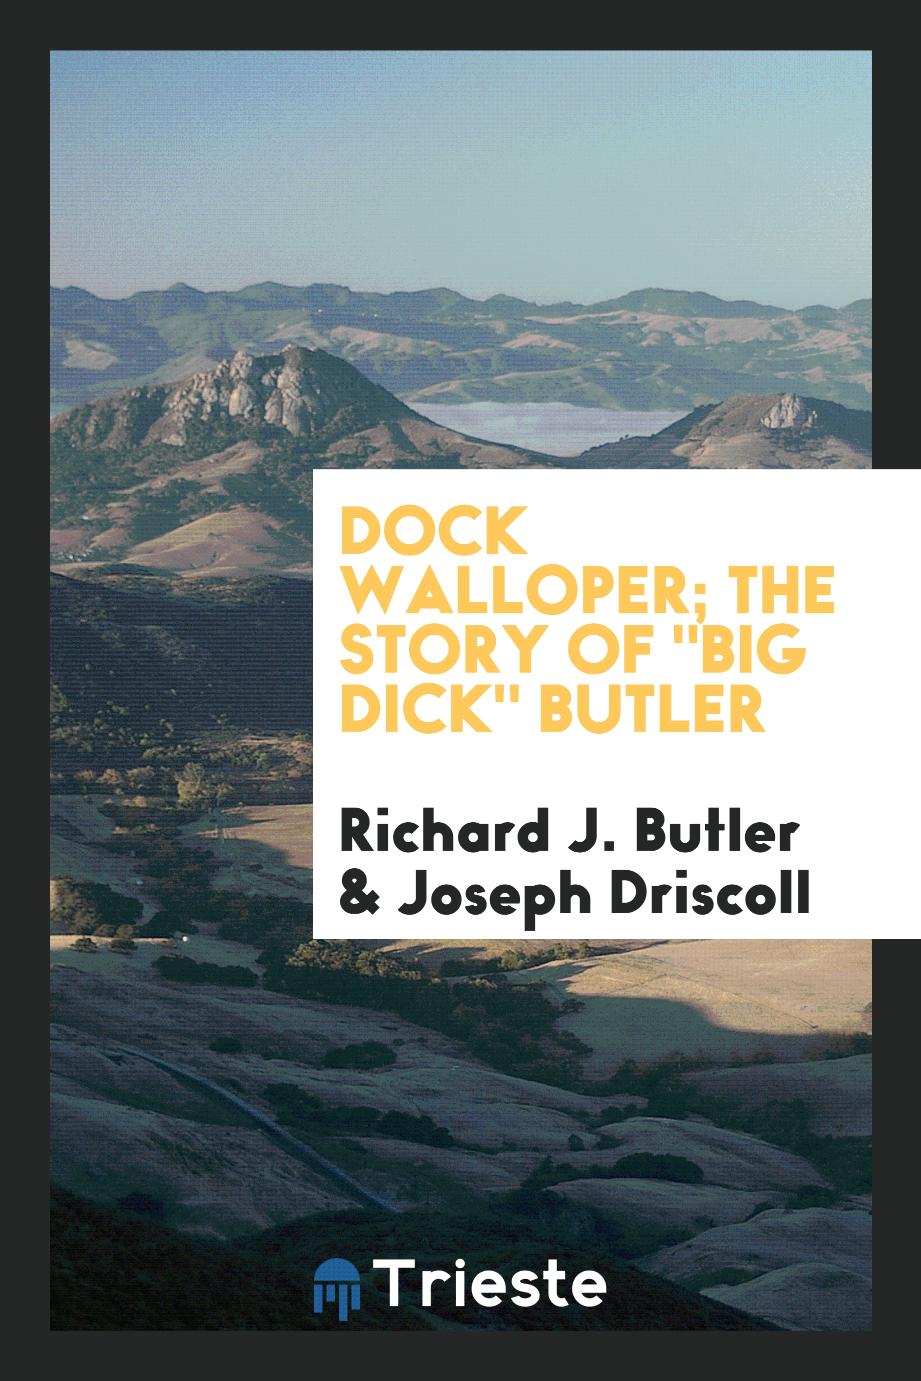 Dock walloper; the story of "Big Dick" Butler